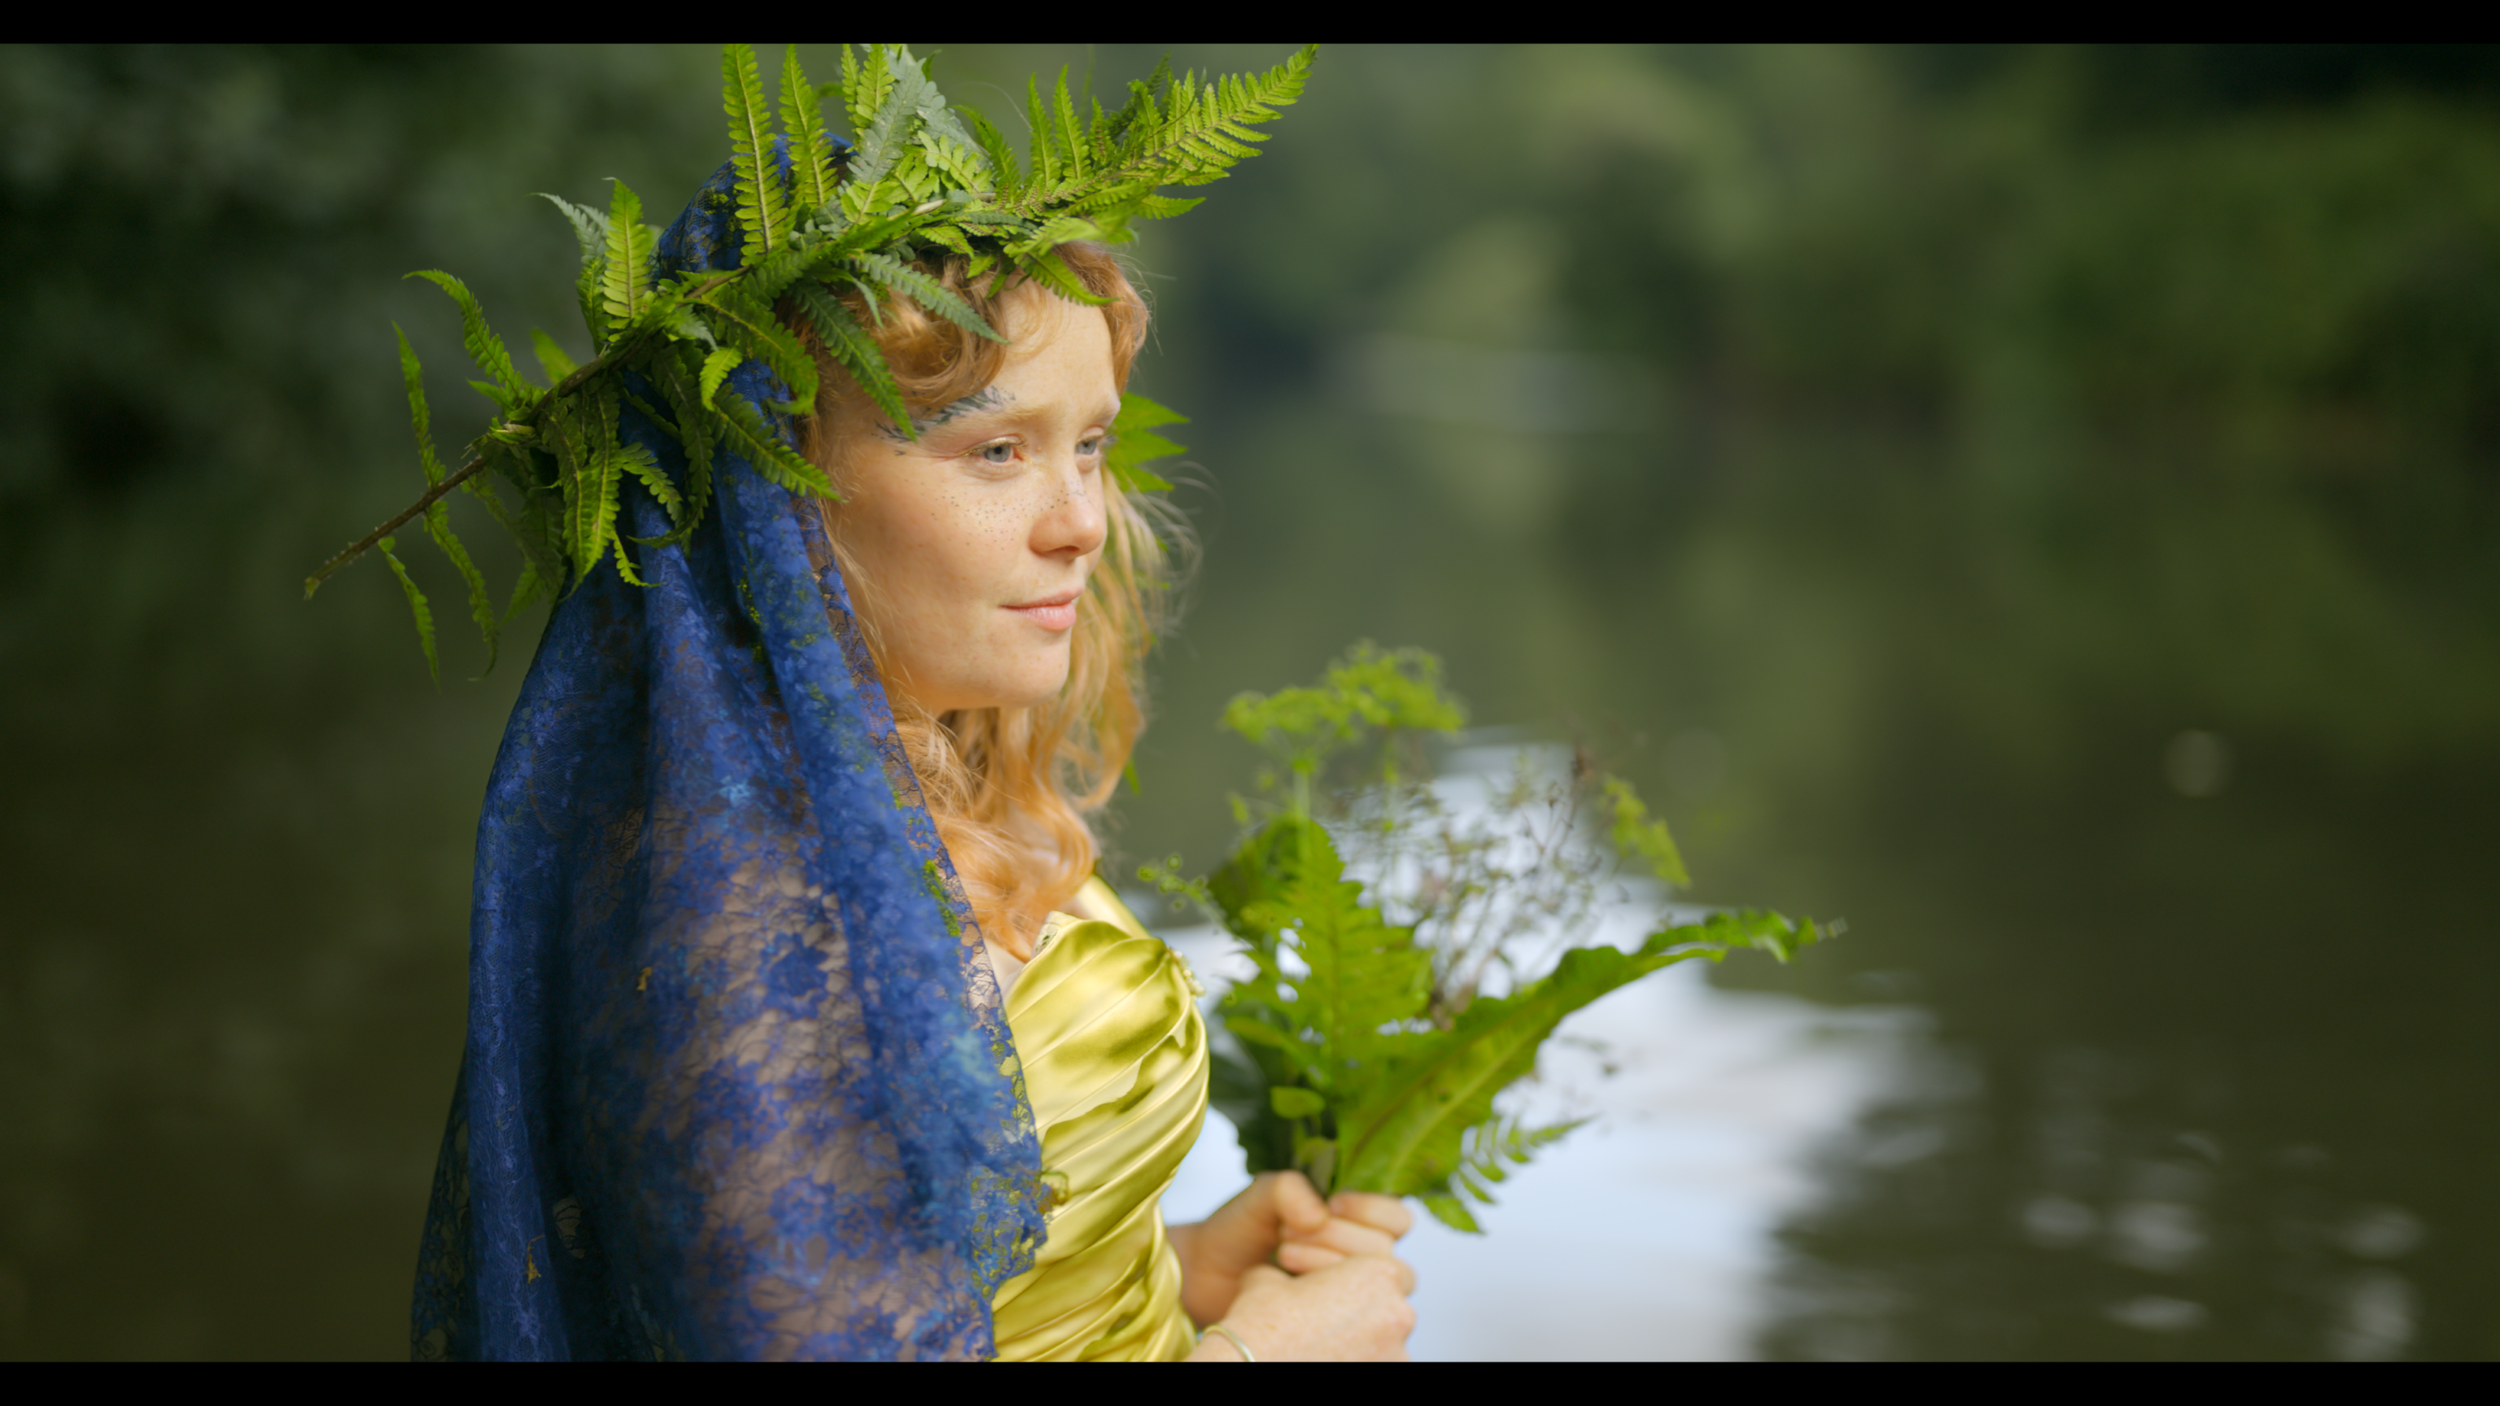 Bride Image 2 (Meg Avon Trump) Film Still by Charlotte Sawyer.png